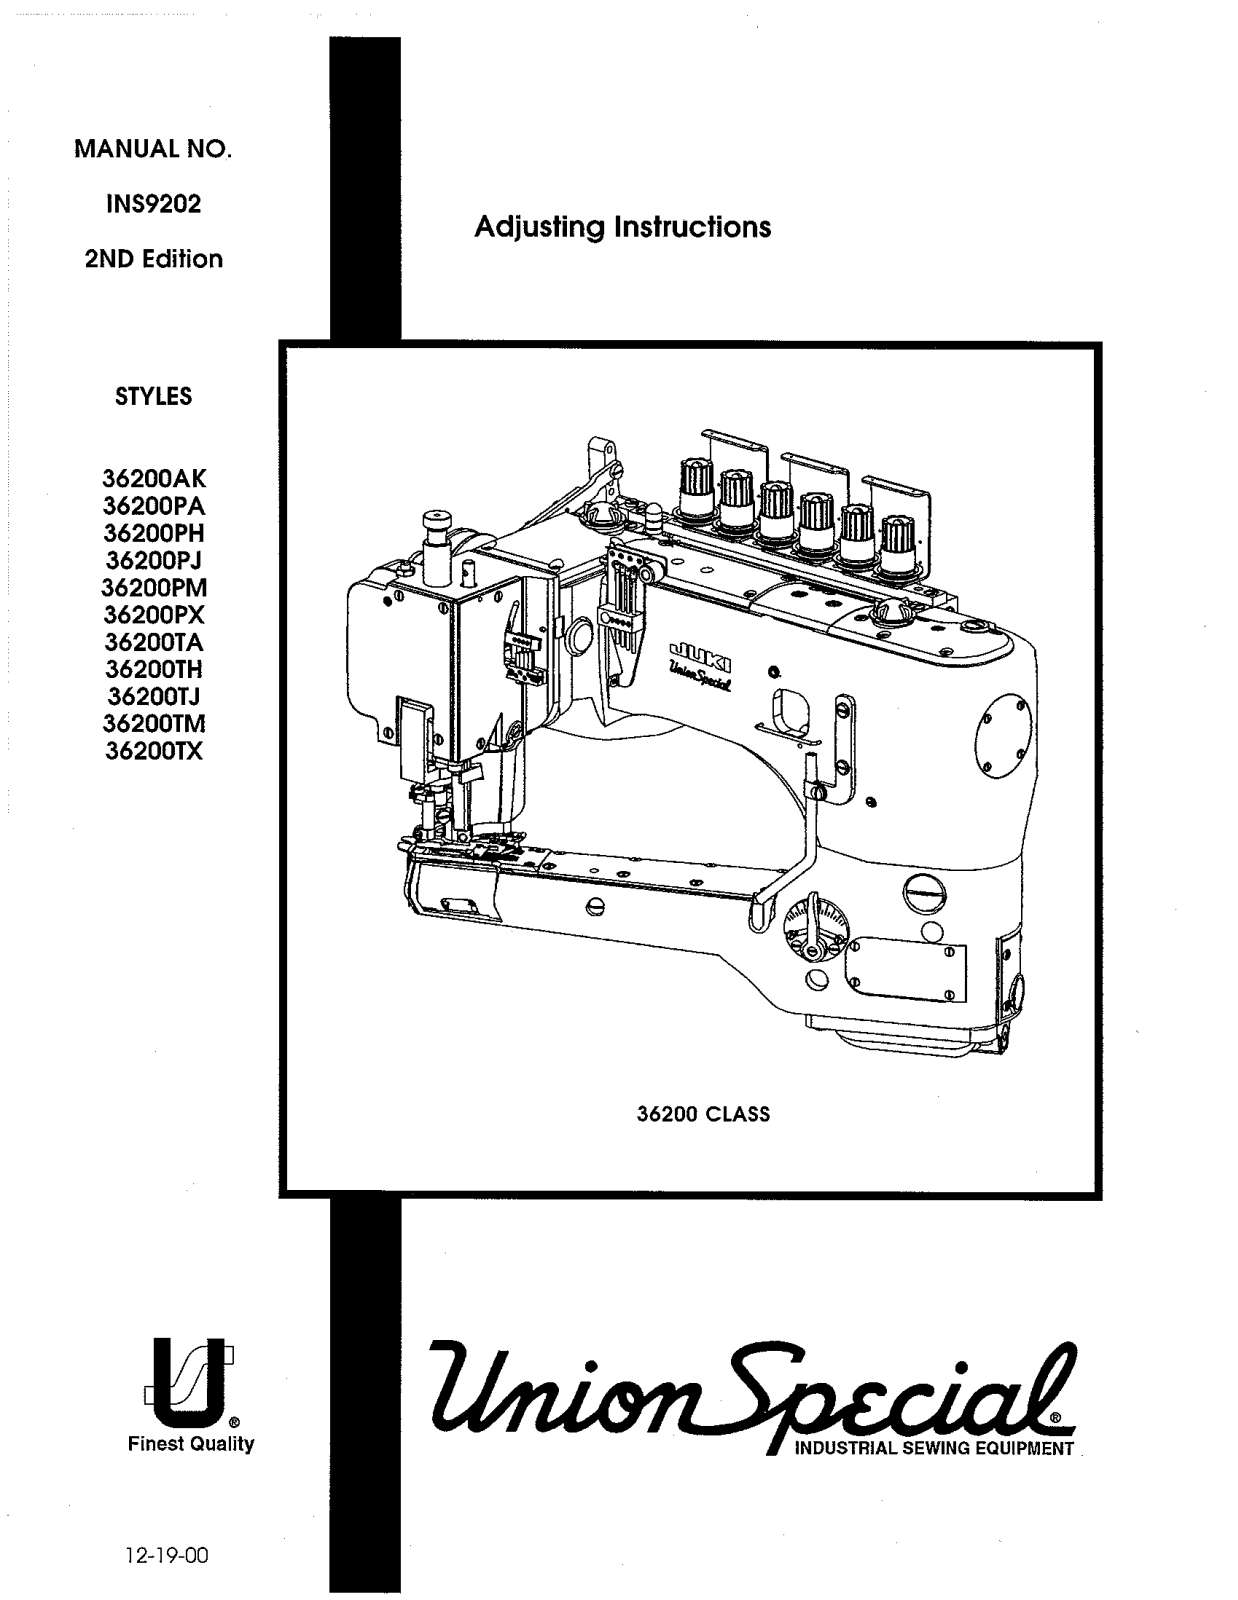 Union Special 36200AK, 36200PA, 36200PH, 36200PJ, 36200PM Parts List